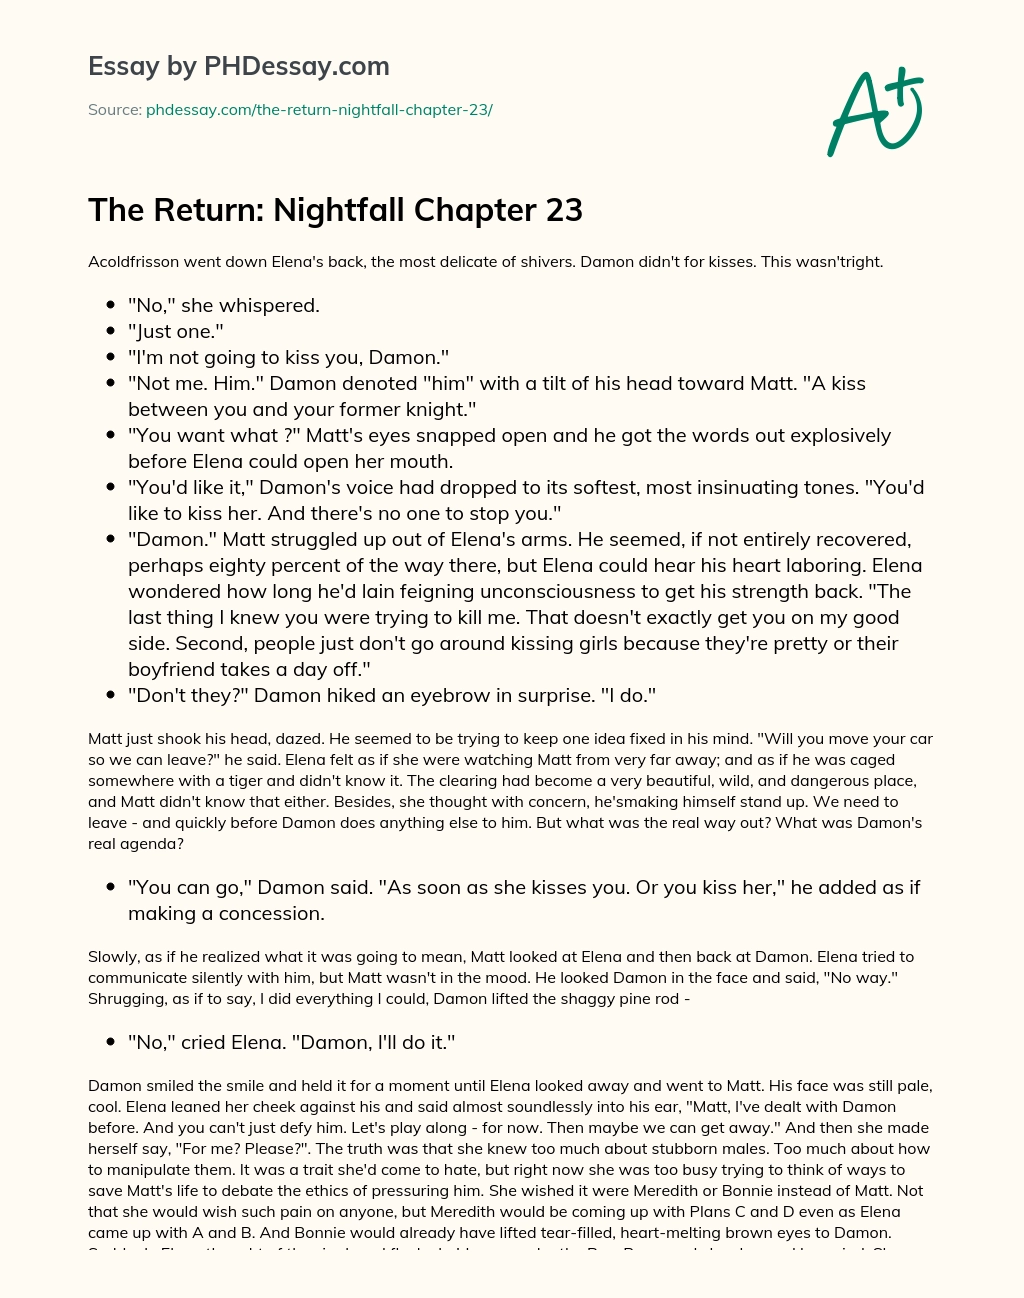 The Return: Nightfall Chapter 23 essay